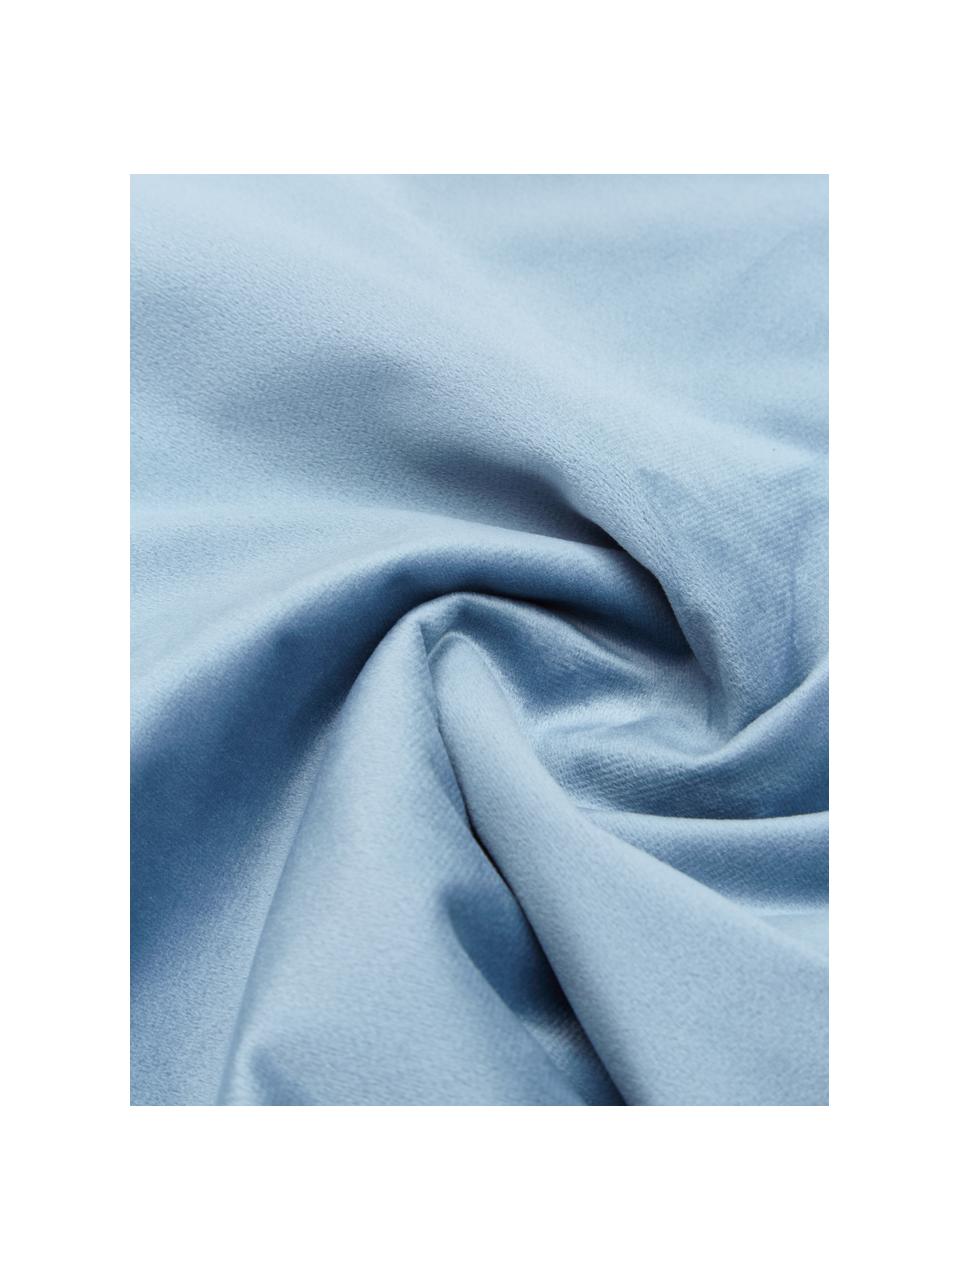 Samt-Kissenhülle Lucie in Hellblau mit Struktur-Oberfläche, 100% Samt (Polyester), Blau, B 45 x L 45 cm